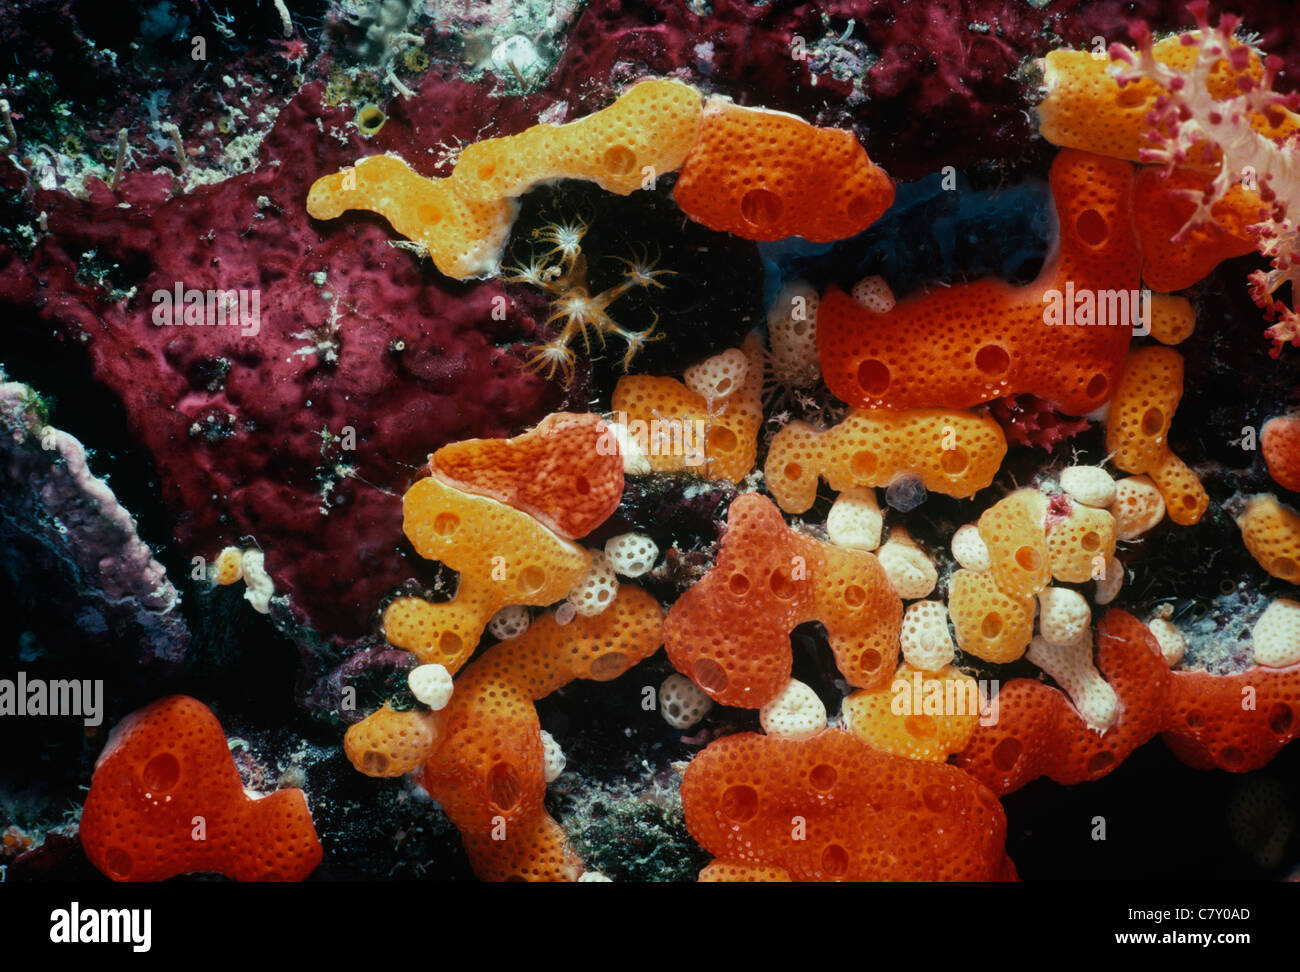 Encrusting Sponge and Colonial Anemones (Nemanthus annamensis). Egypt - Red Sea Stock Photo